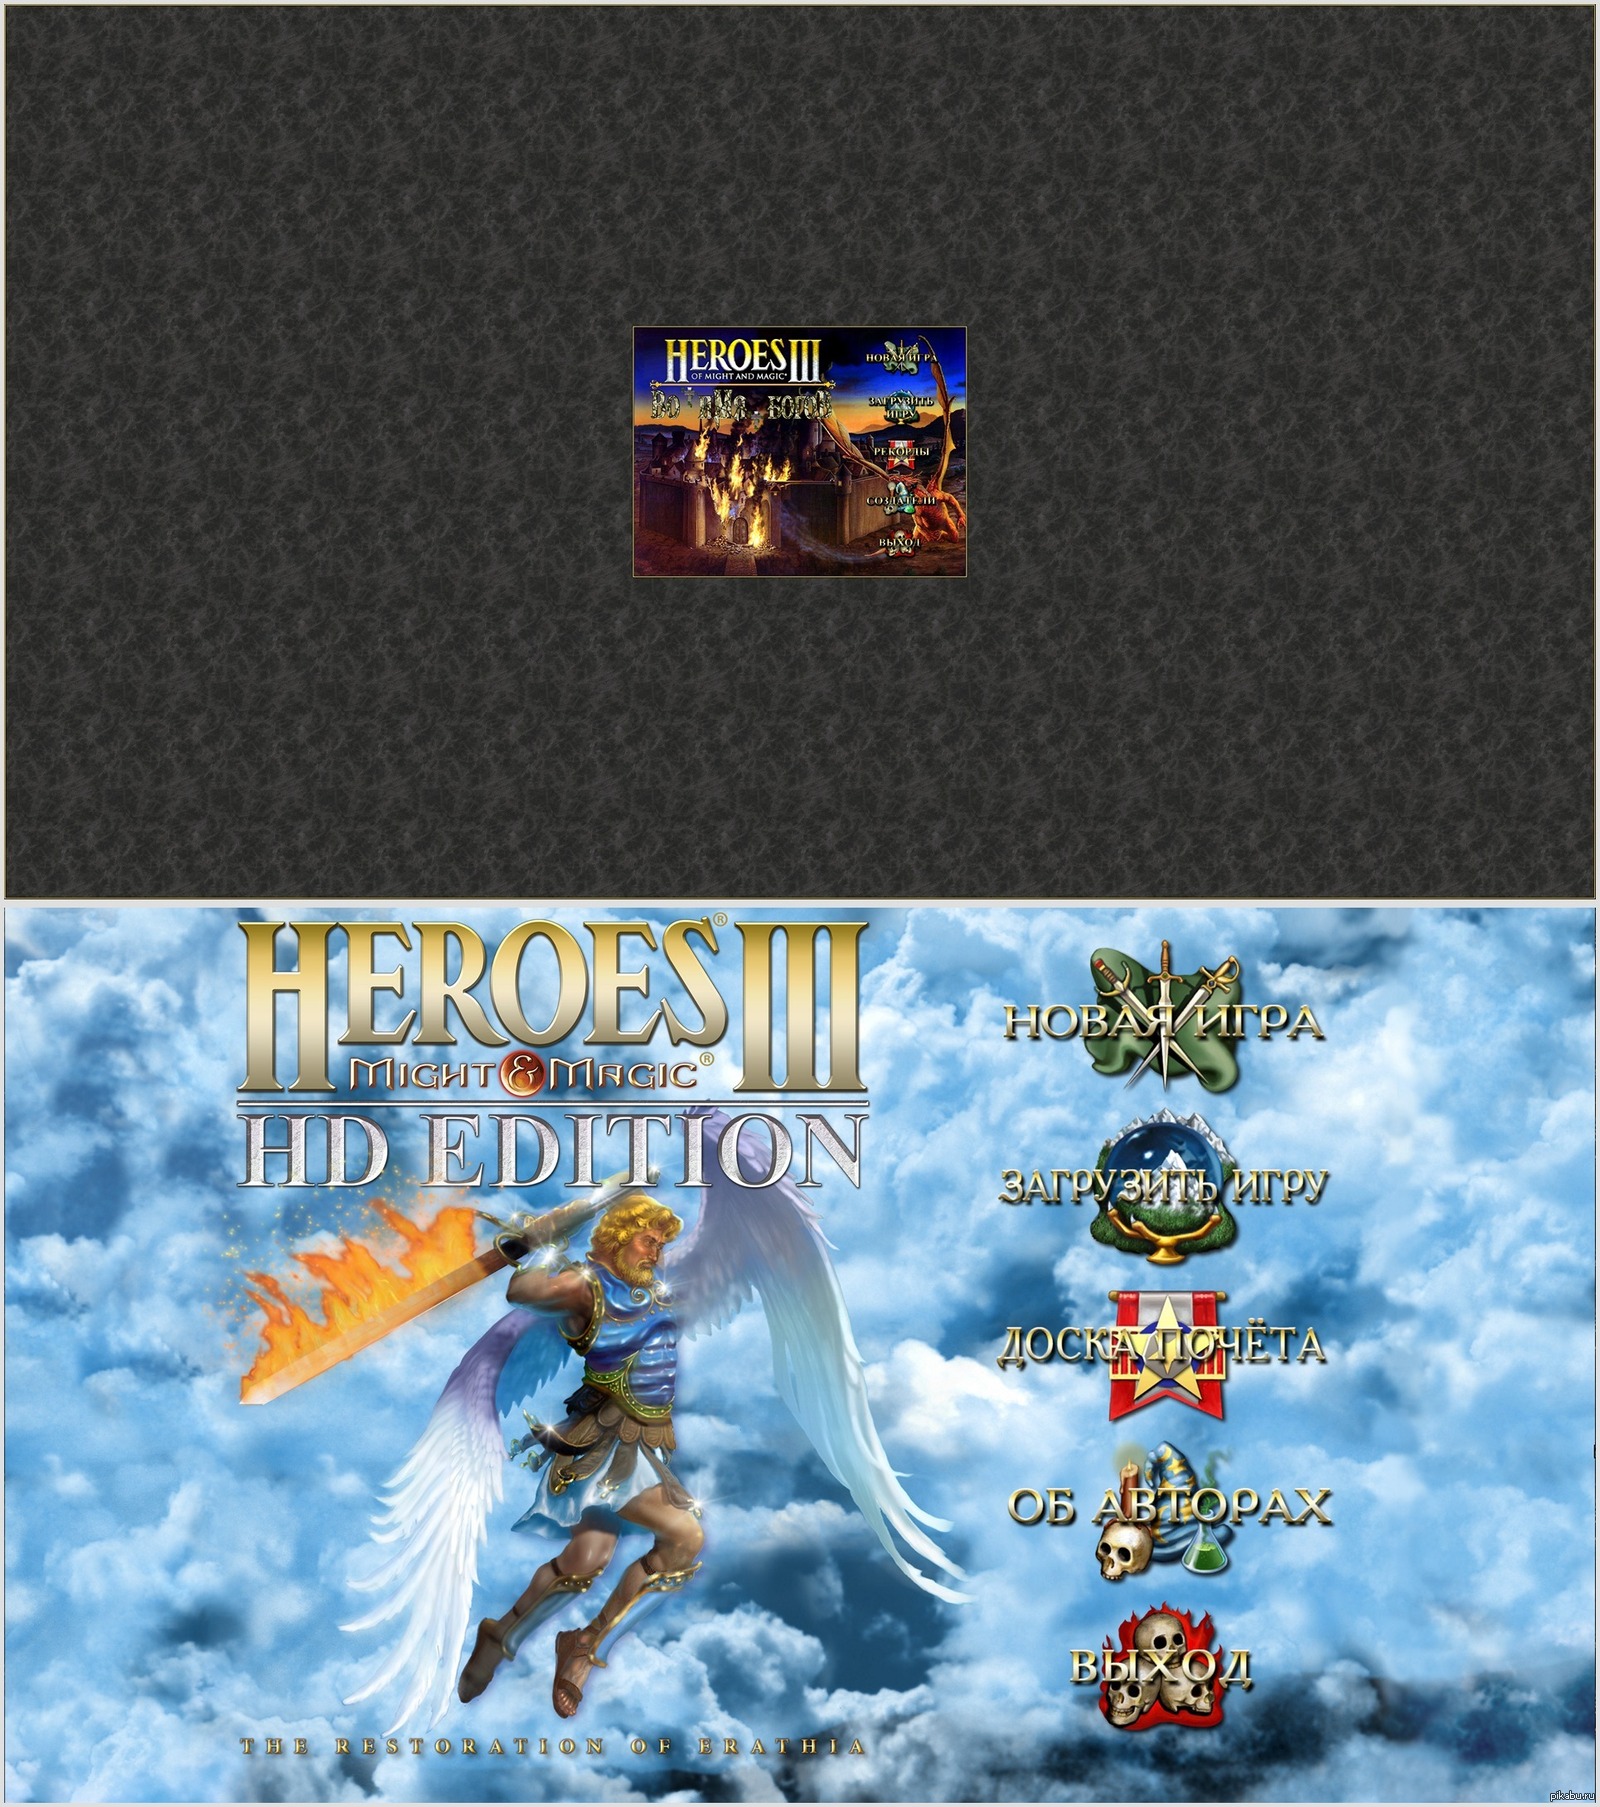 Heroes Of Might & Magic III HD. Сравнение Графики. | Пикабу